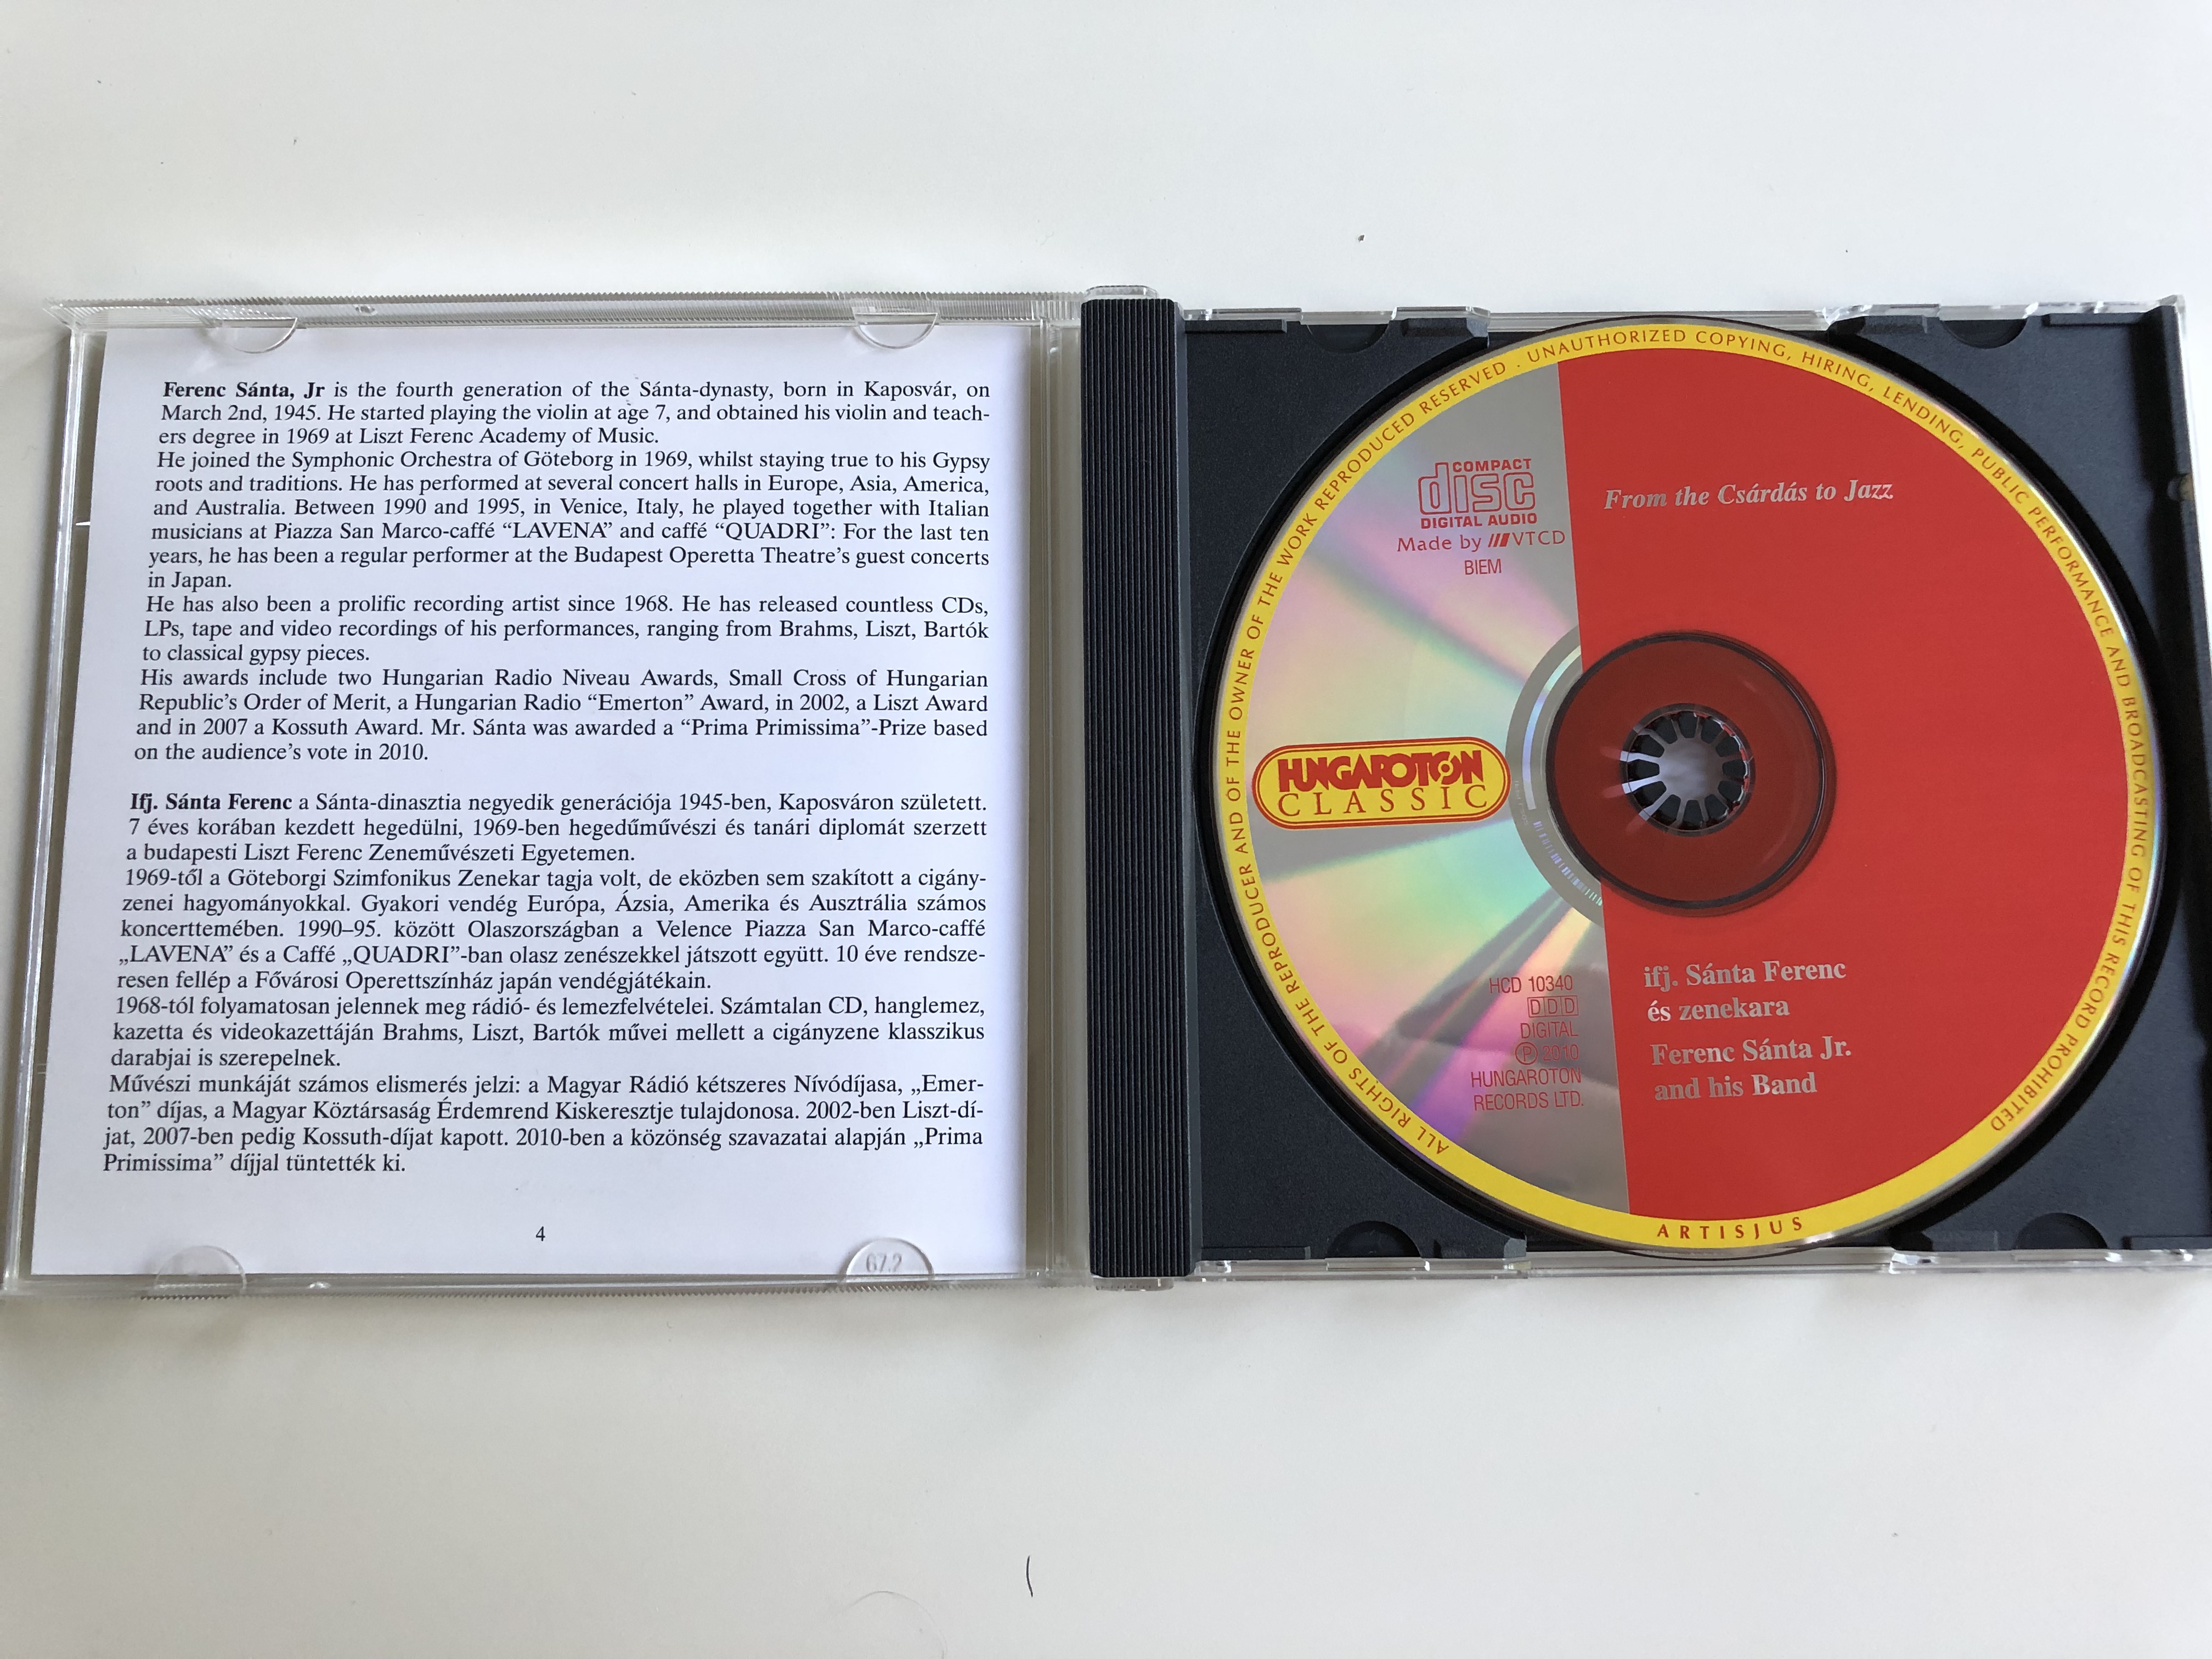 ferenc-s-nta-jr.-from-the-cs-rd-s-to-jazz-hungaroton-classic-audio-cd-2010-hcd-10340-4-.jpg